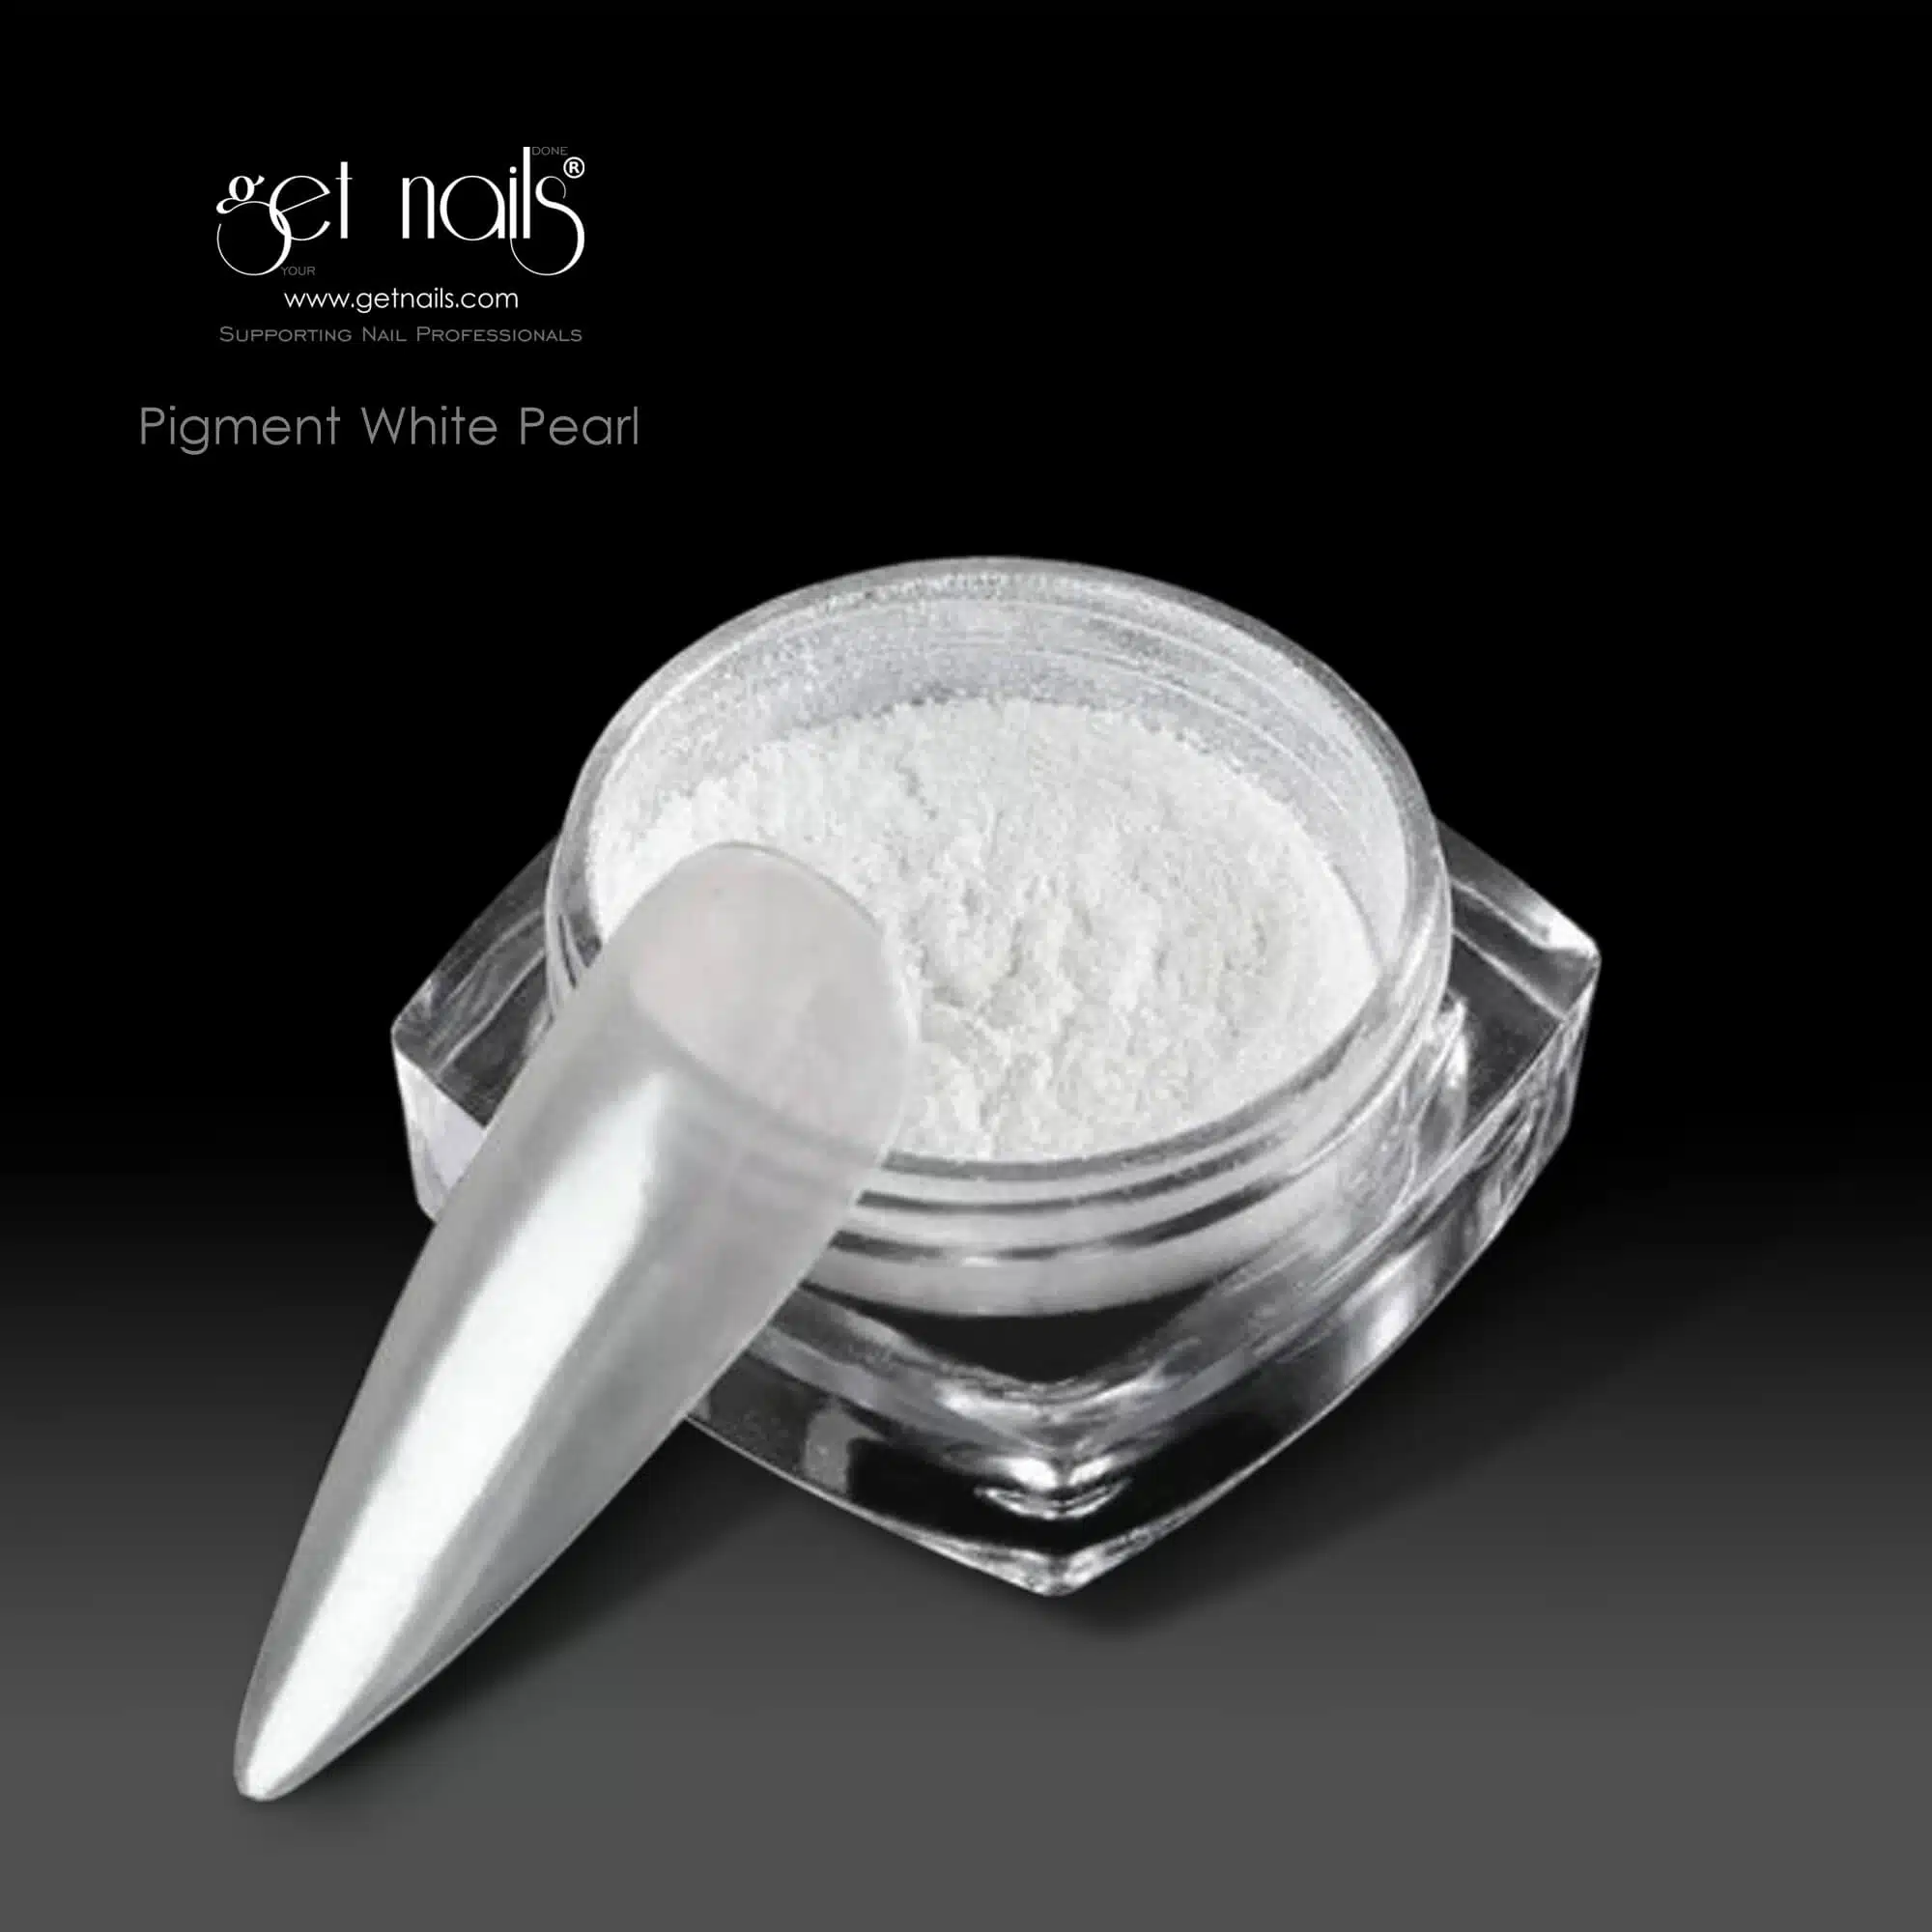 Get Nails Austria - Pigment White Pearl